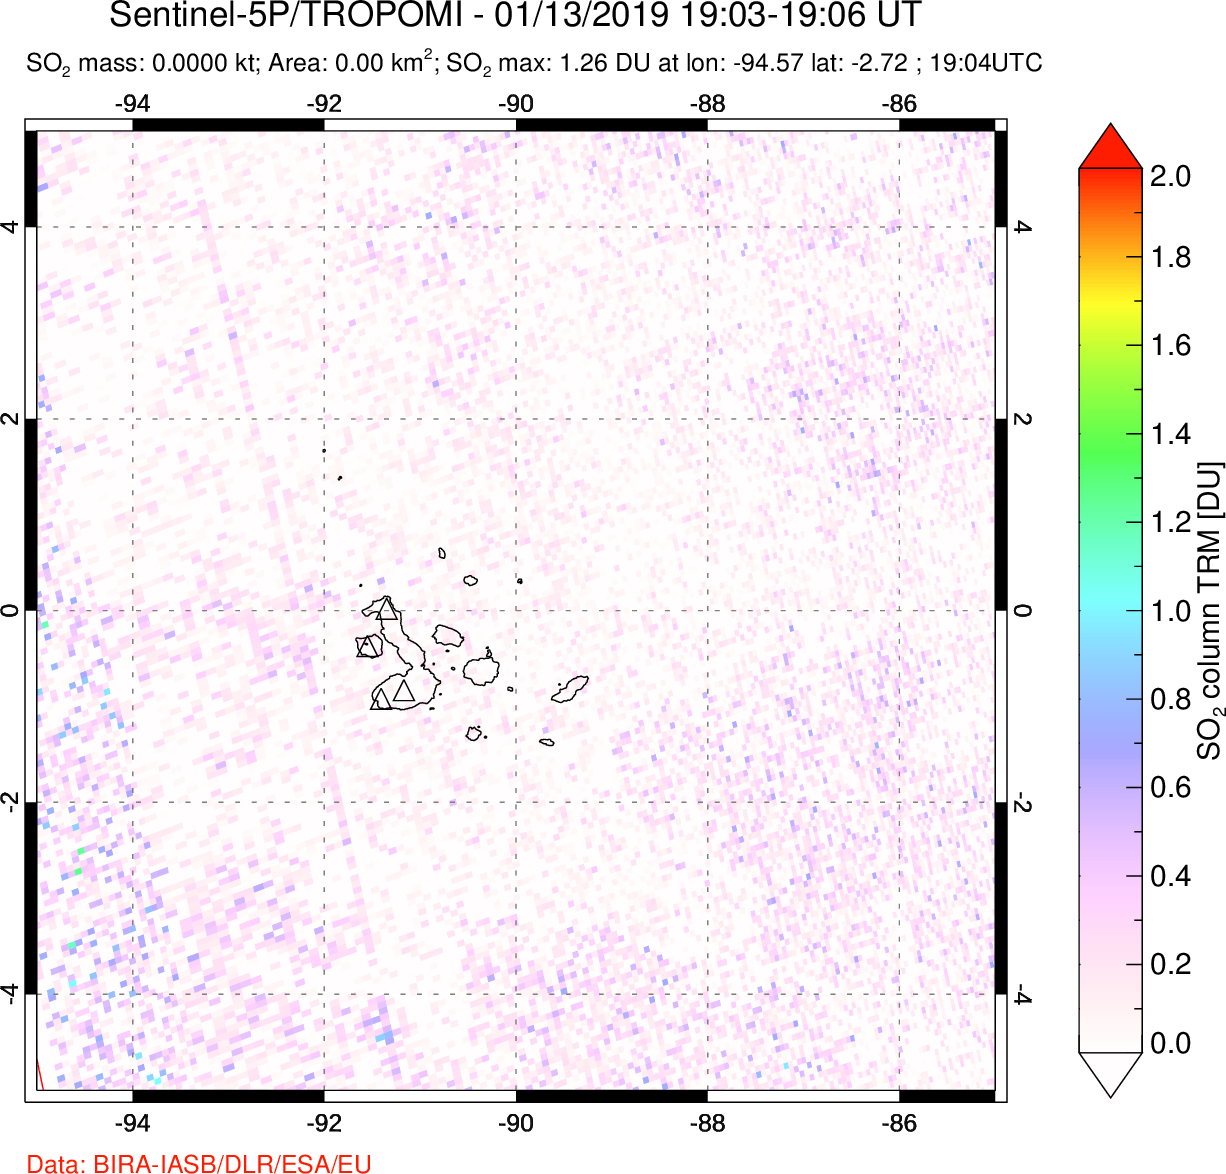 A sulfur dioxide image over Galápagos Islands on Jan 13, 2019.